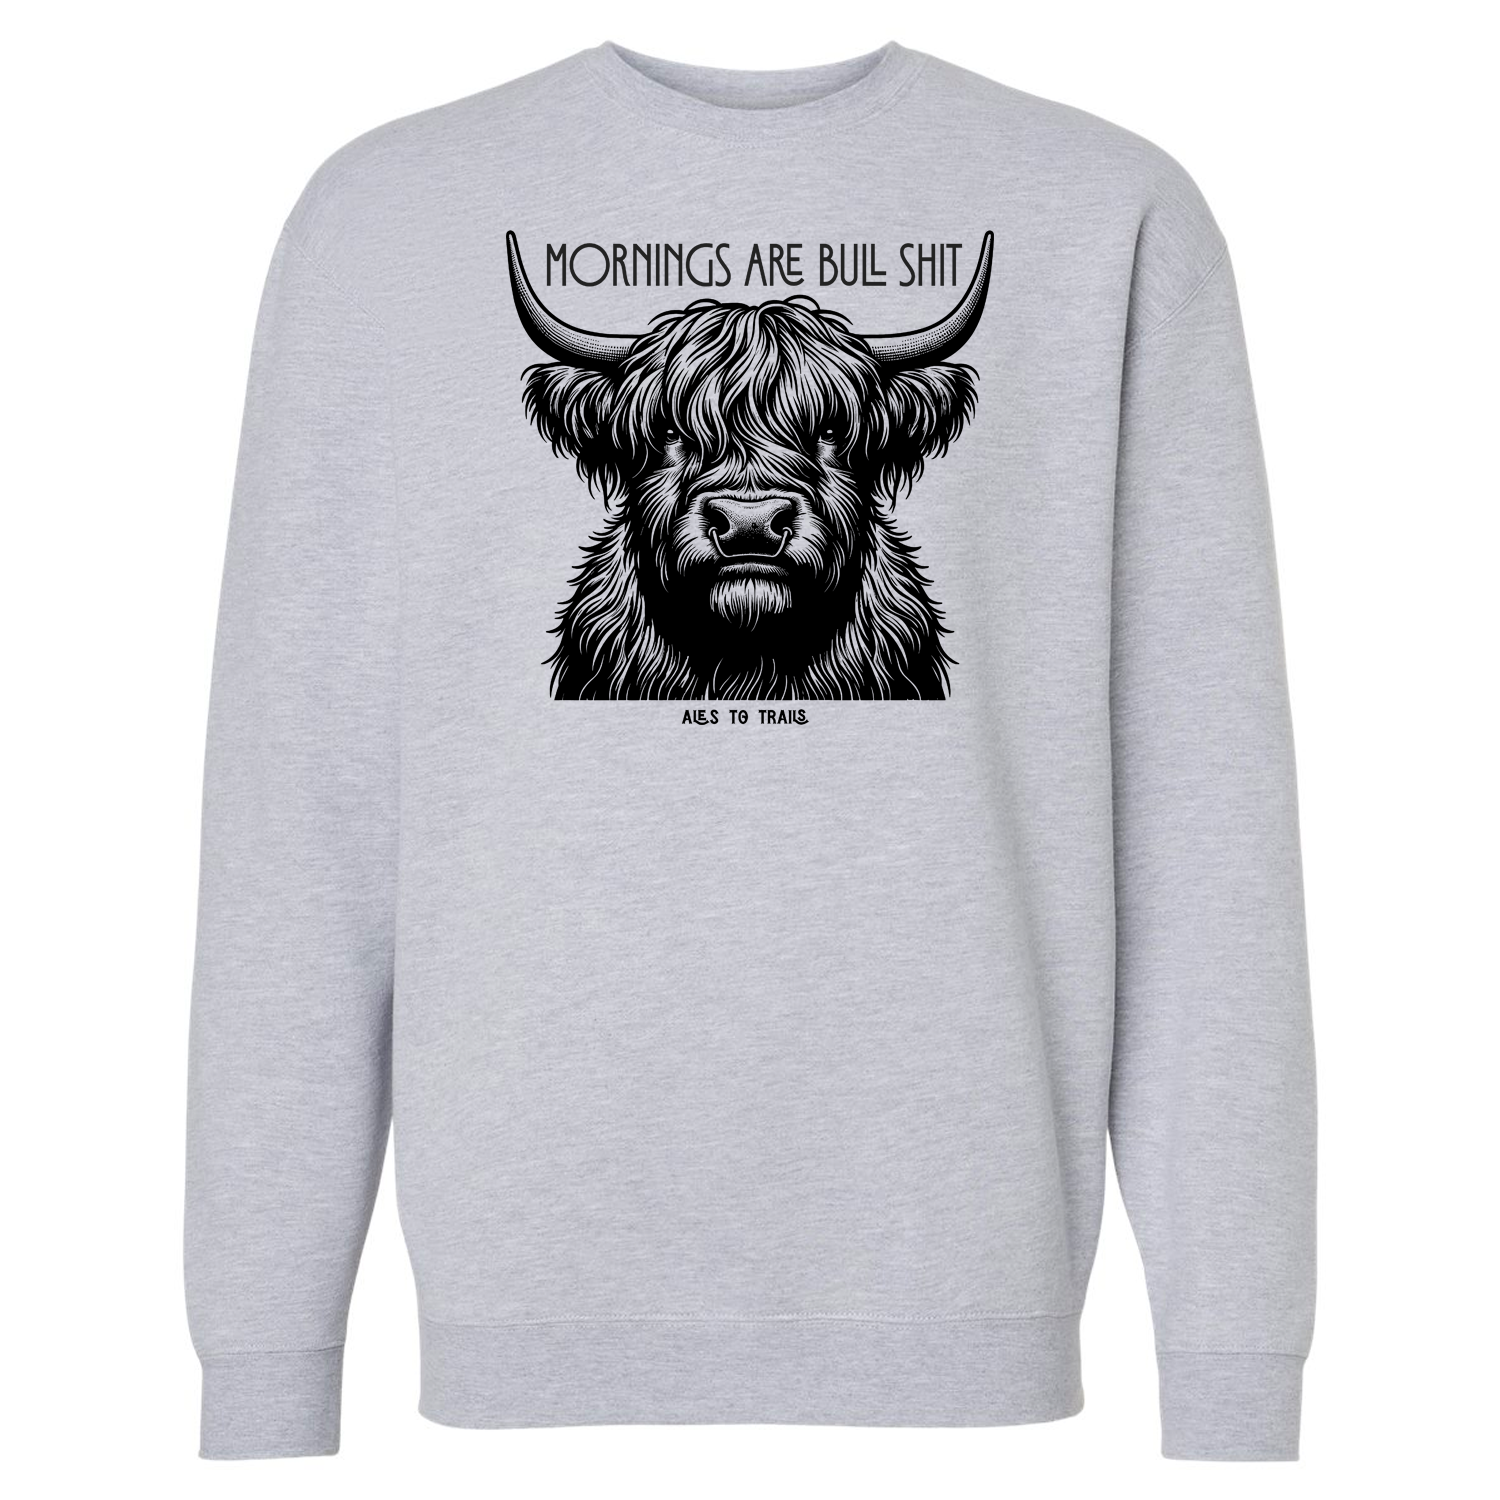 Mornings are Bull Boxy Sweatshirt